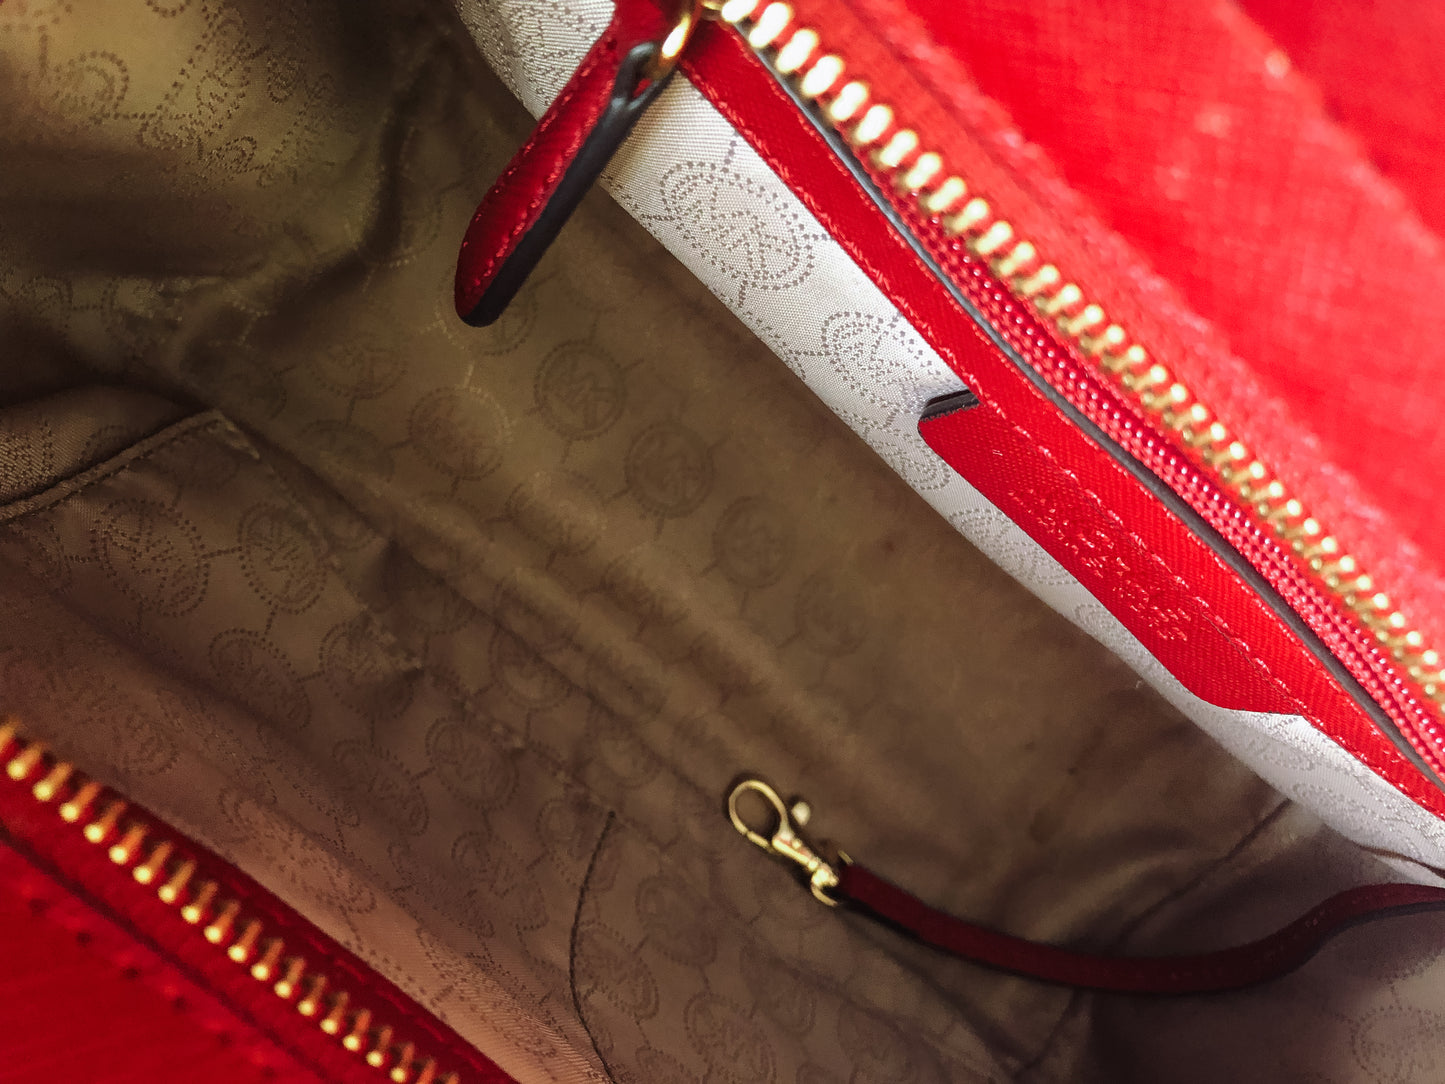 Red Michael Kors handbag